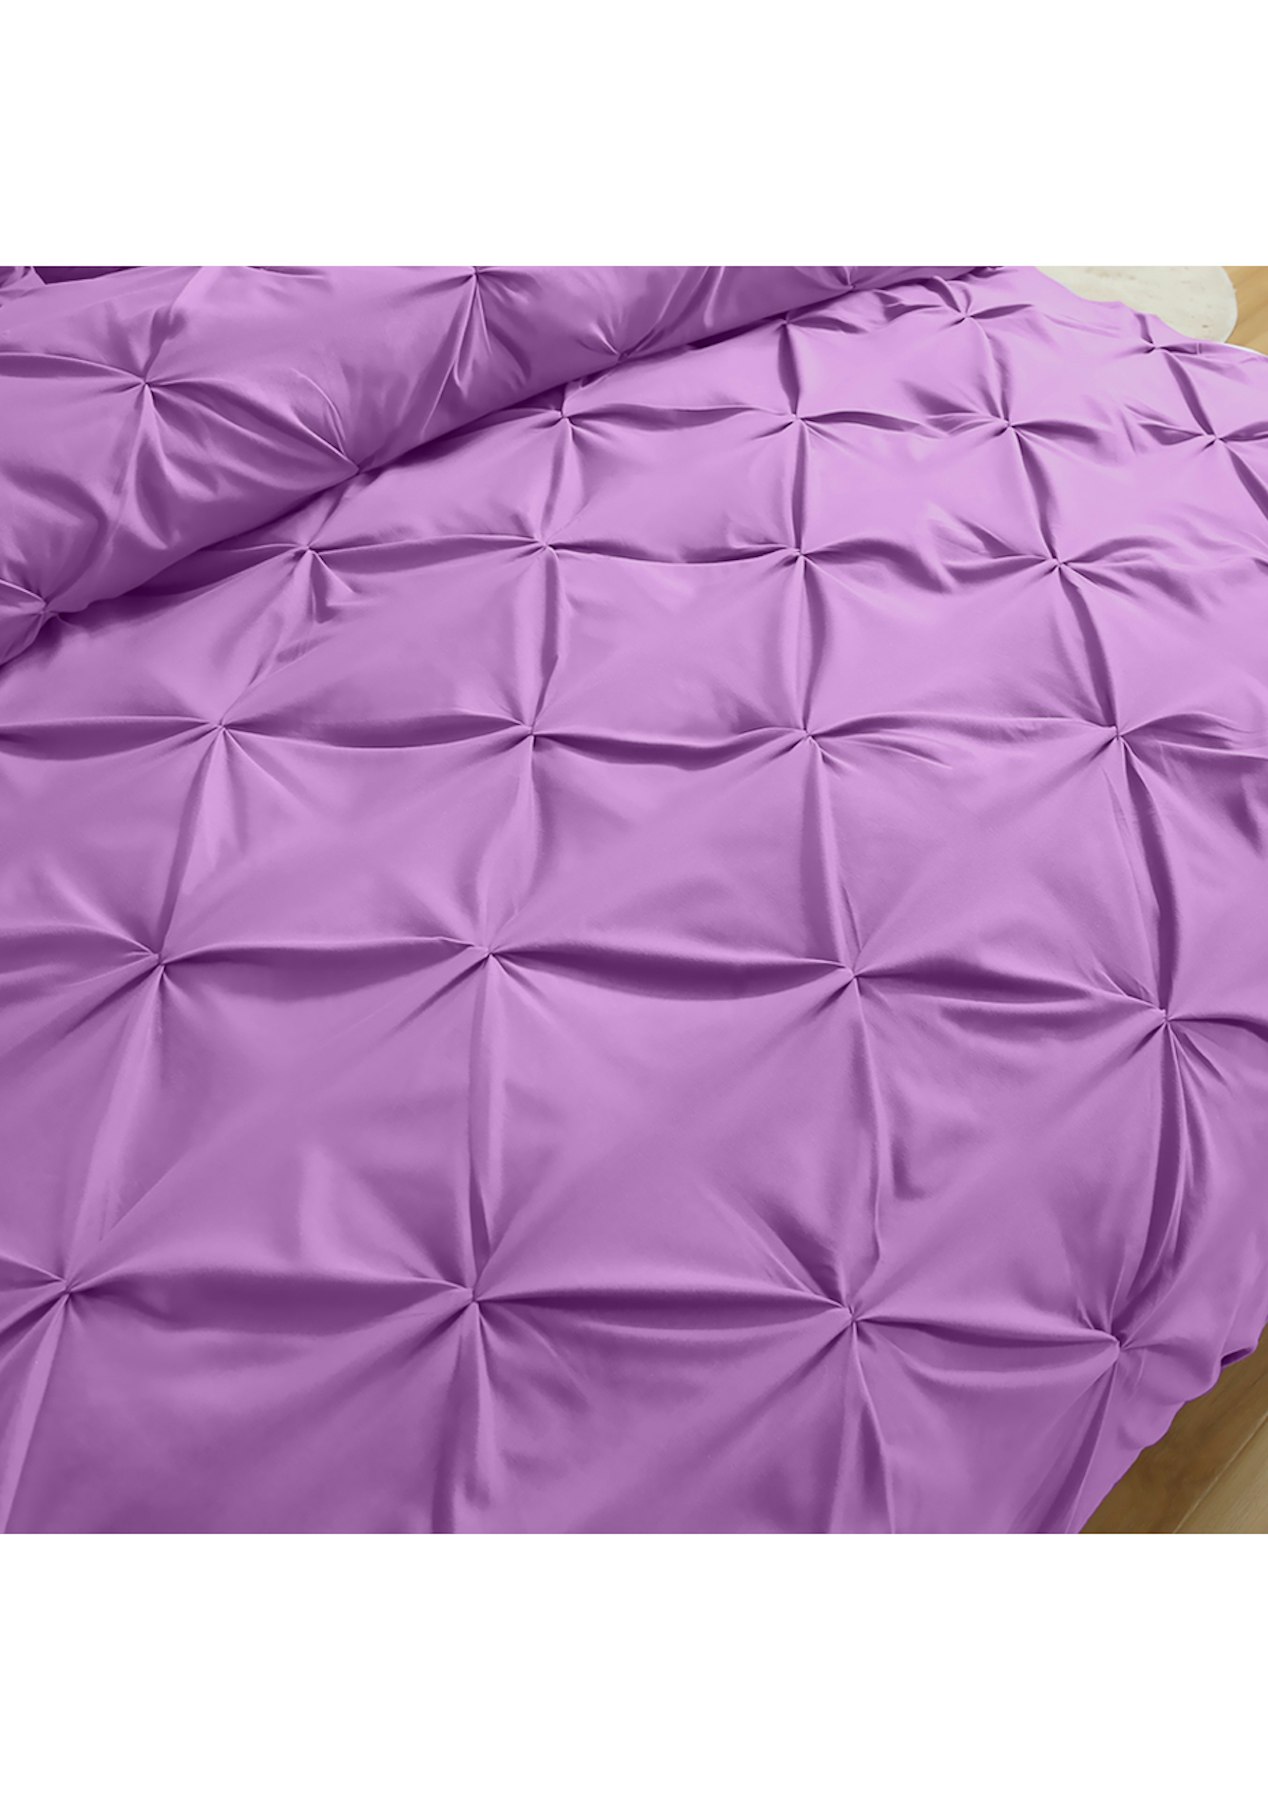 Dreamz Diamond Pintuck Duvet Cover And Pillow Case Set In Super